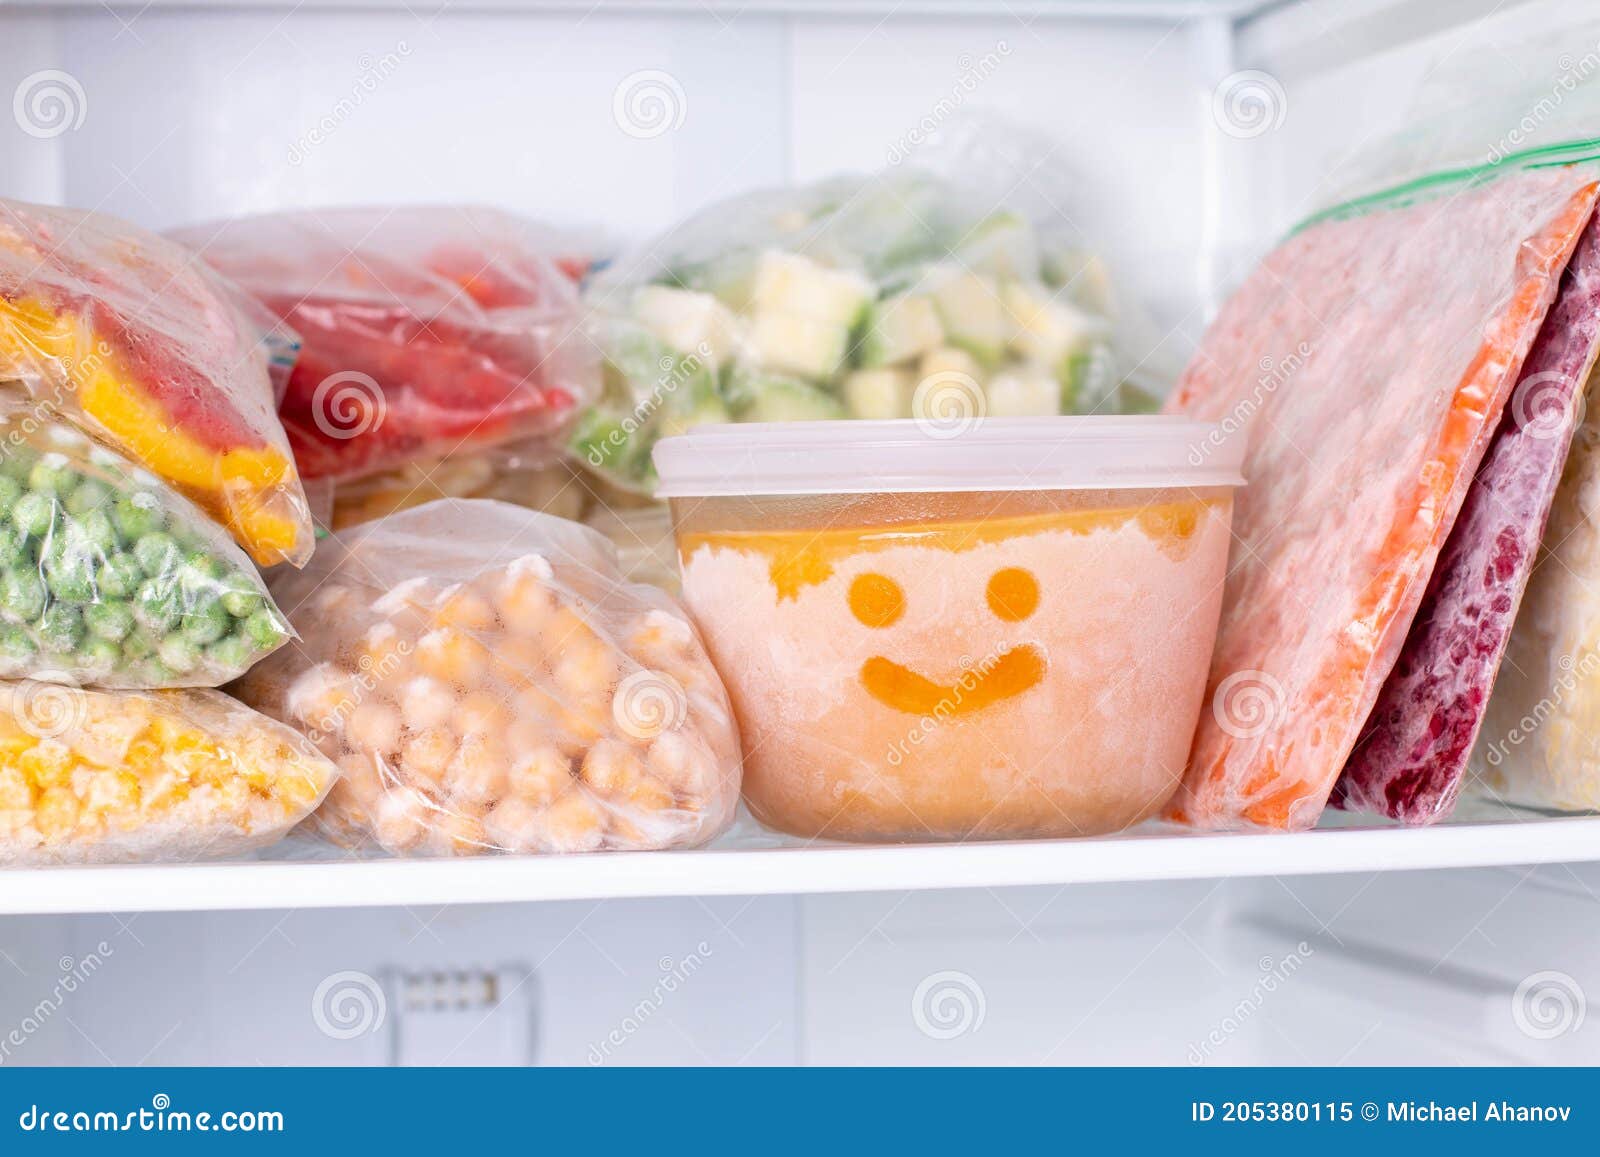 frozen food in the freezer. frozen vegetables, soup, ready meals